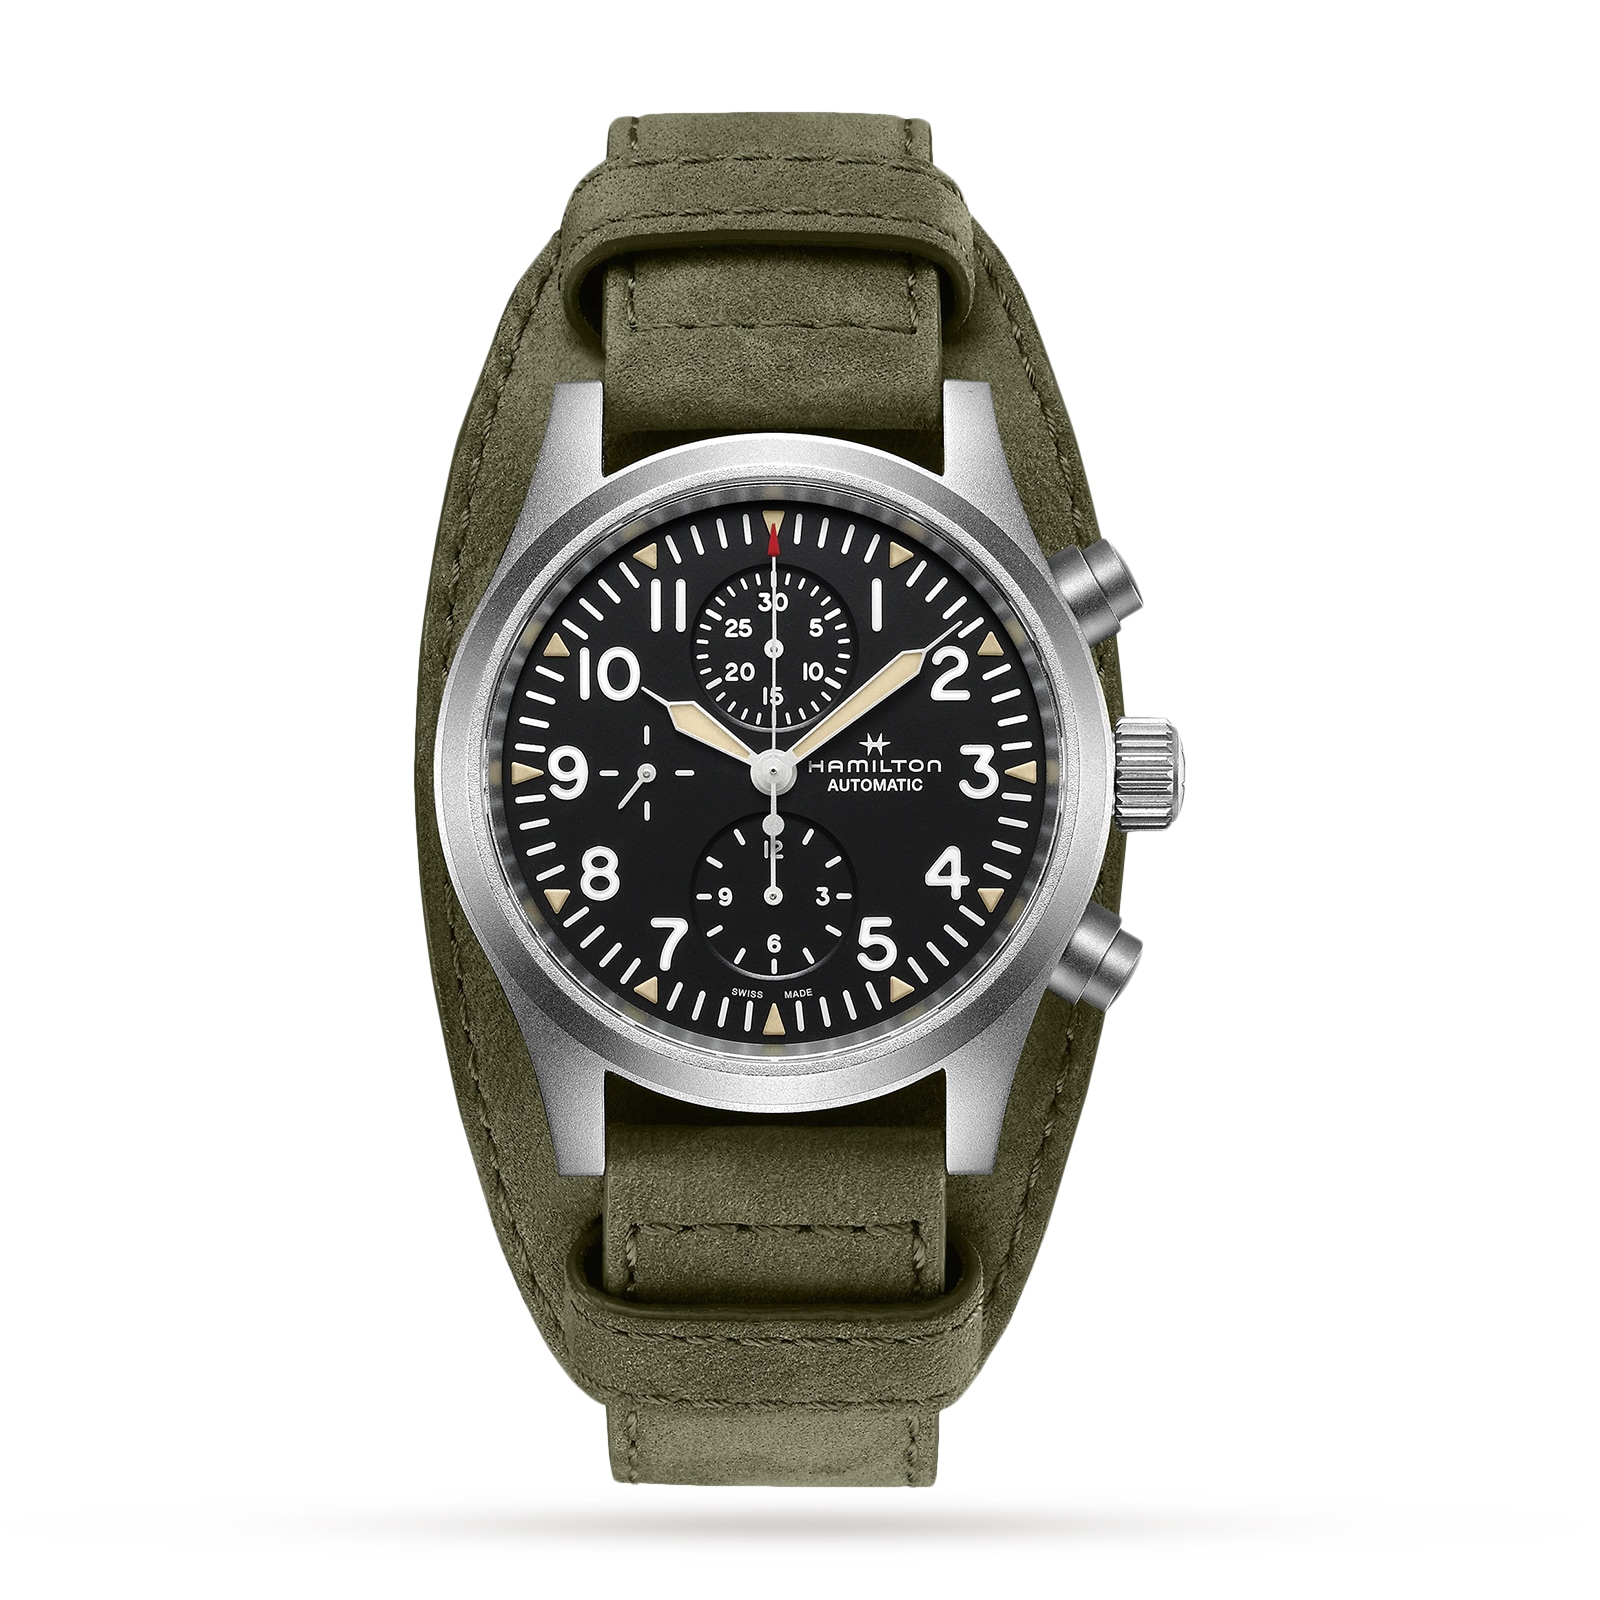 Hamilton Watch - Hamilton Khaki Field Collection | Military Watches |  Hamilton Watch